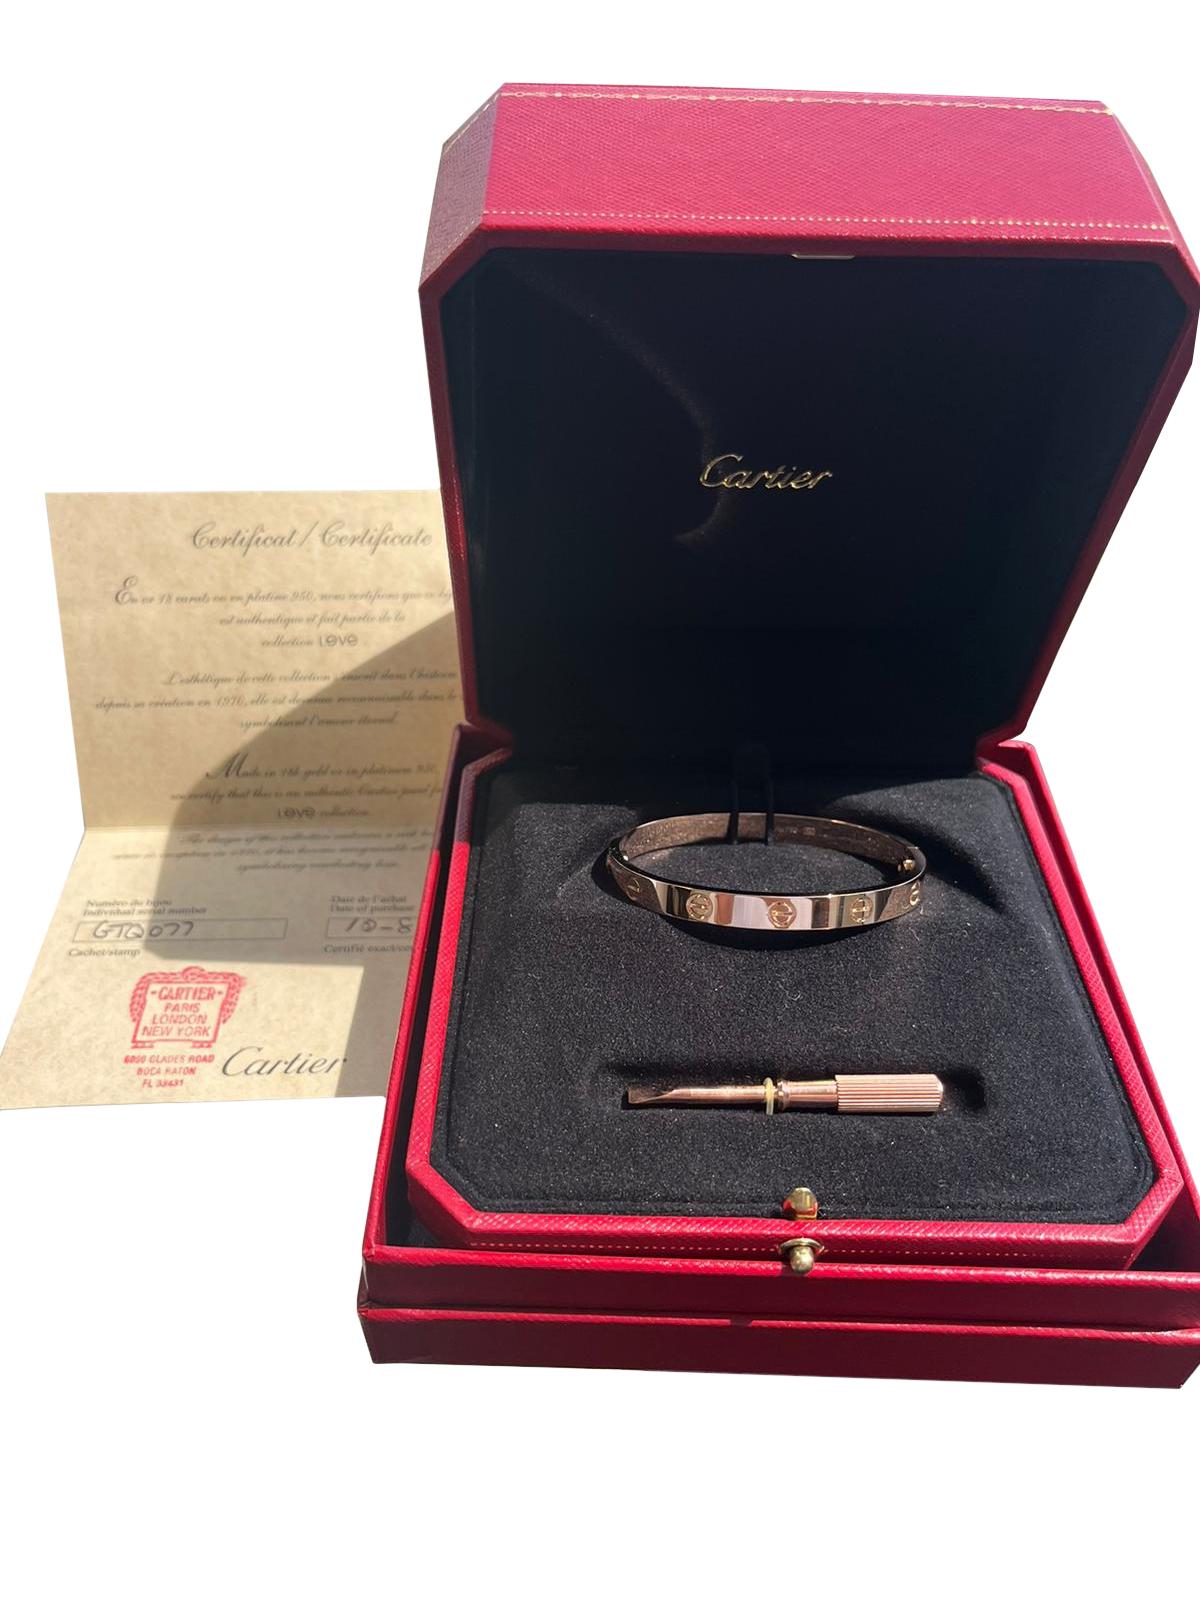 Cartier Love Bracelet 18K Rose Gold Size 16 With Screwdriver For Sale 2